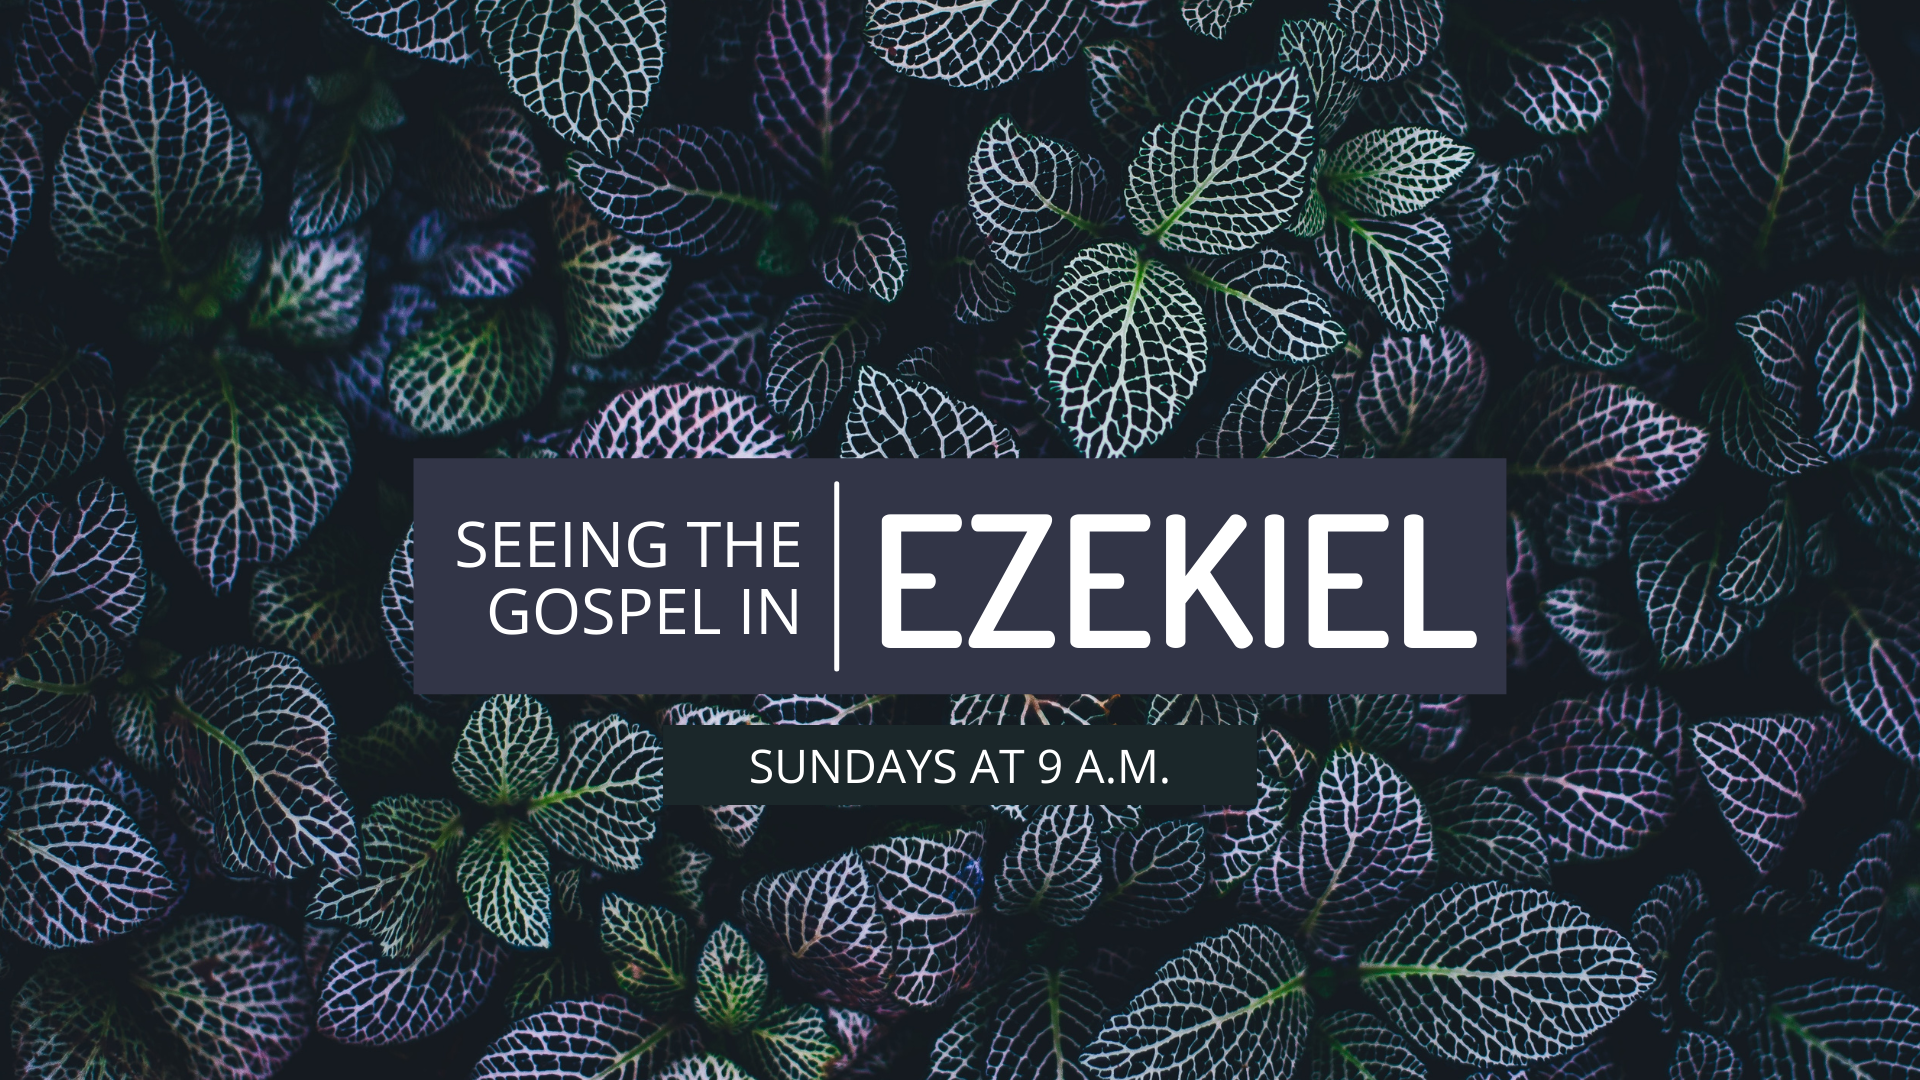 Ezekiel Sunday School at Hope Church in Ballston Spa, New York